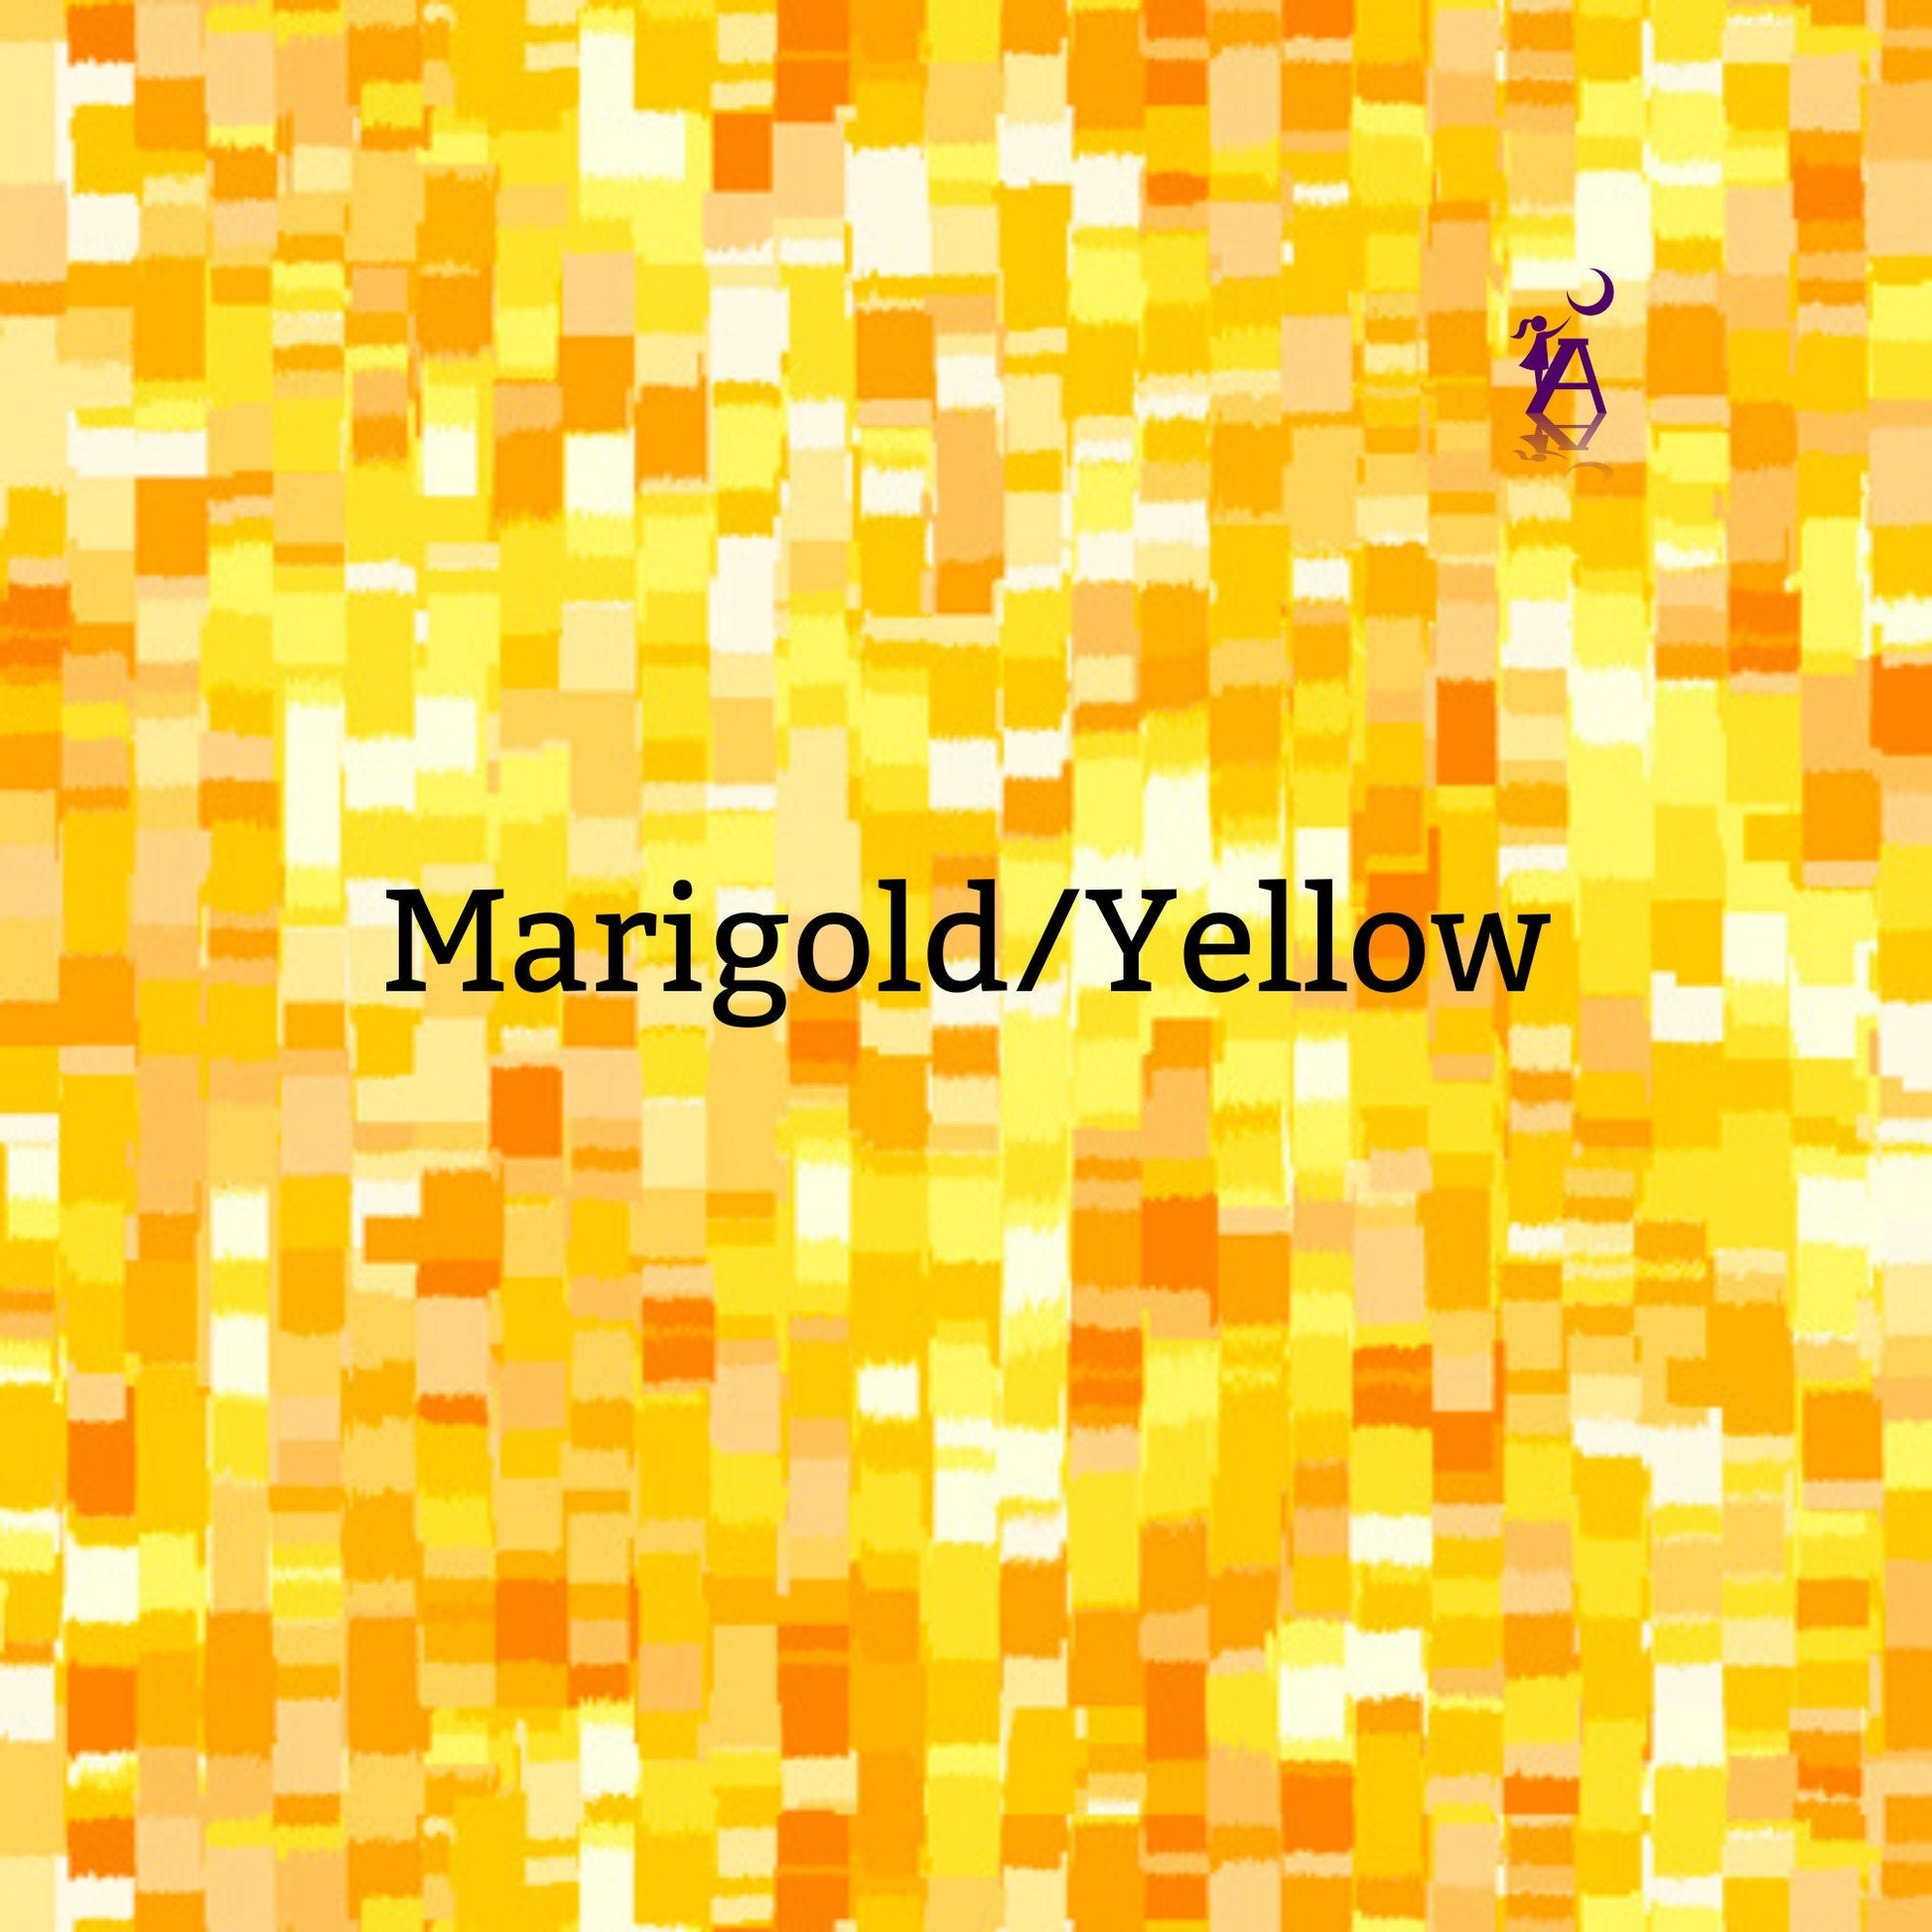 QT Fabrics Fabric 1/4 yard (9"x43/44") / Marigold Pixel QT Tonal Squares Fabric in MARIGOLD yellow Tonal Squares or SOLID yellow embroidery fabric